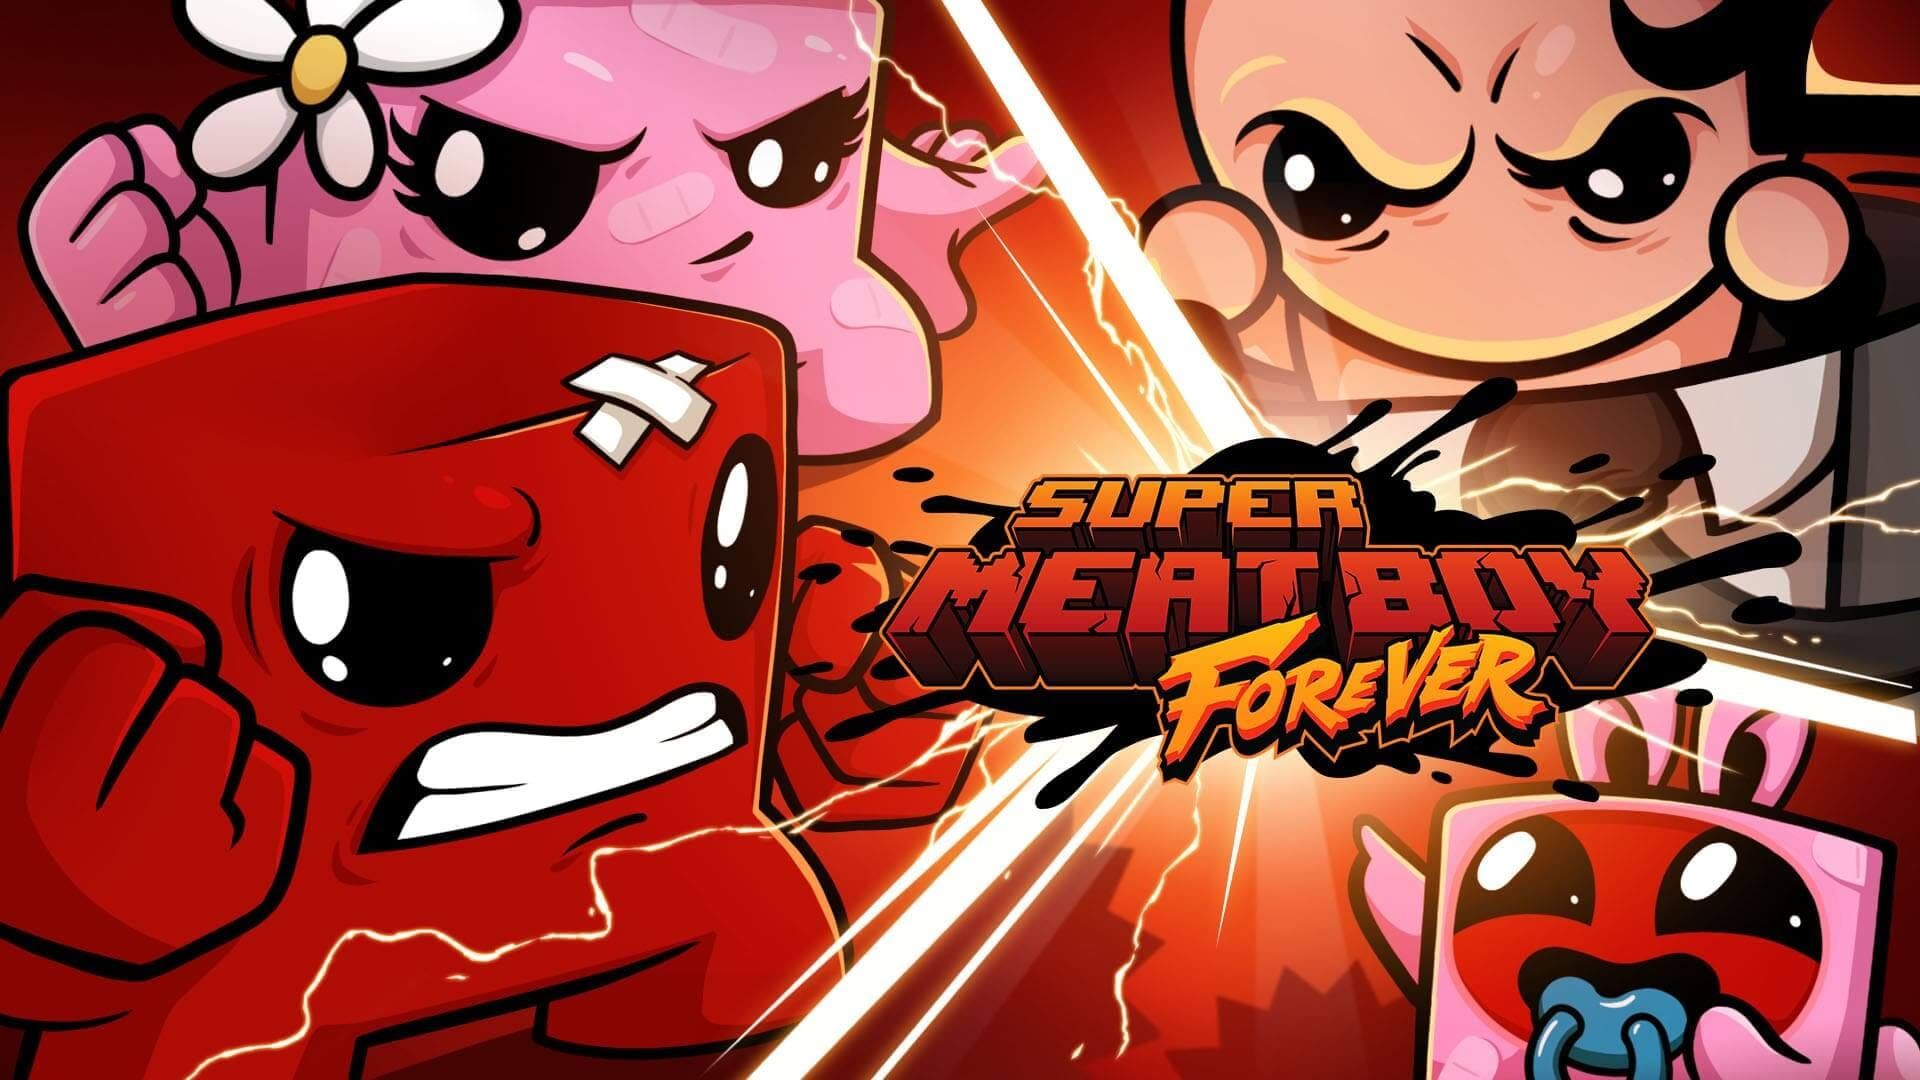 Релиз Super Meat Boy Forever на PS4 и Xbox One состоится 16 апреля